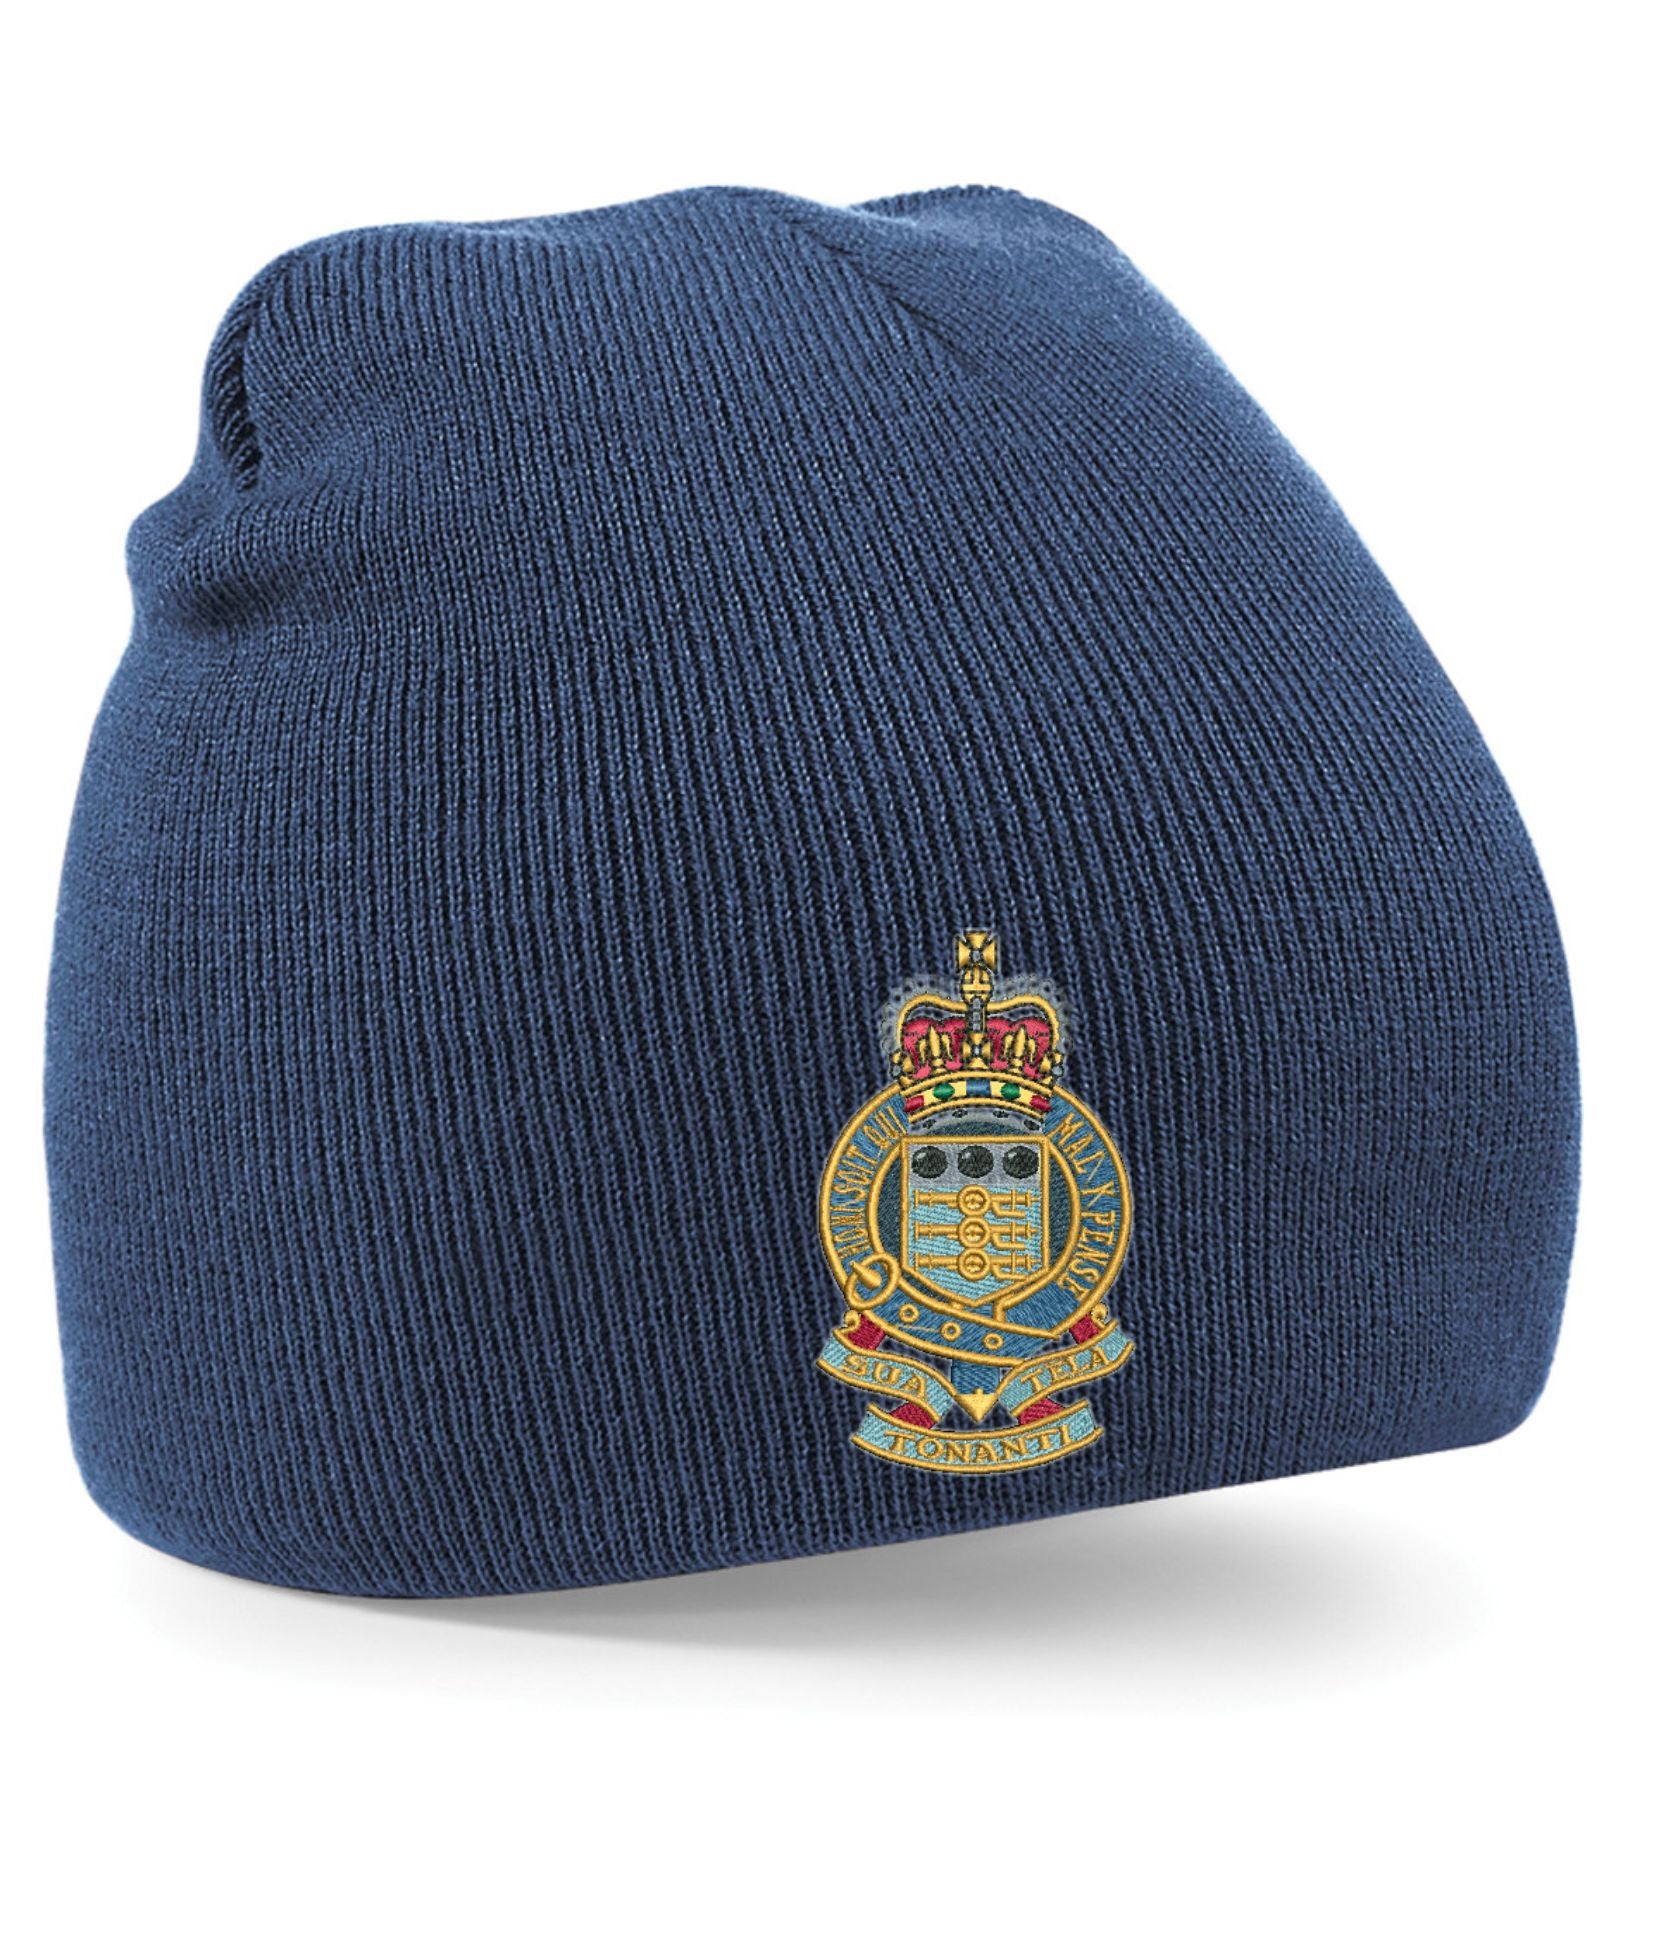 Royal Army Ordnance Corps Beanie Hats